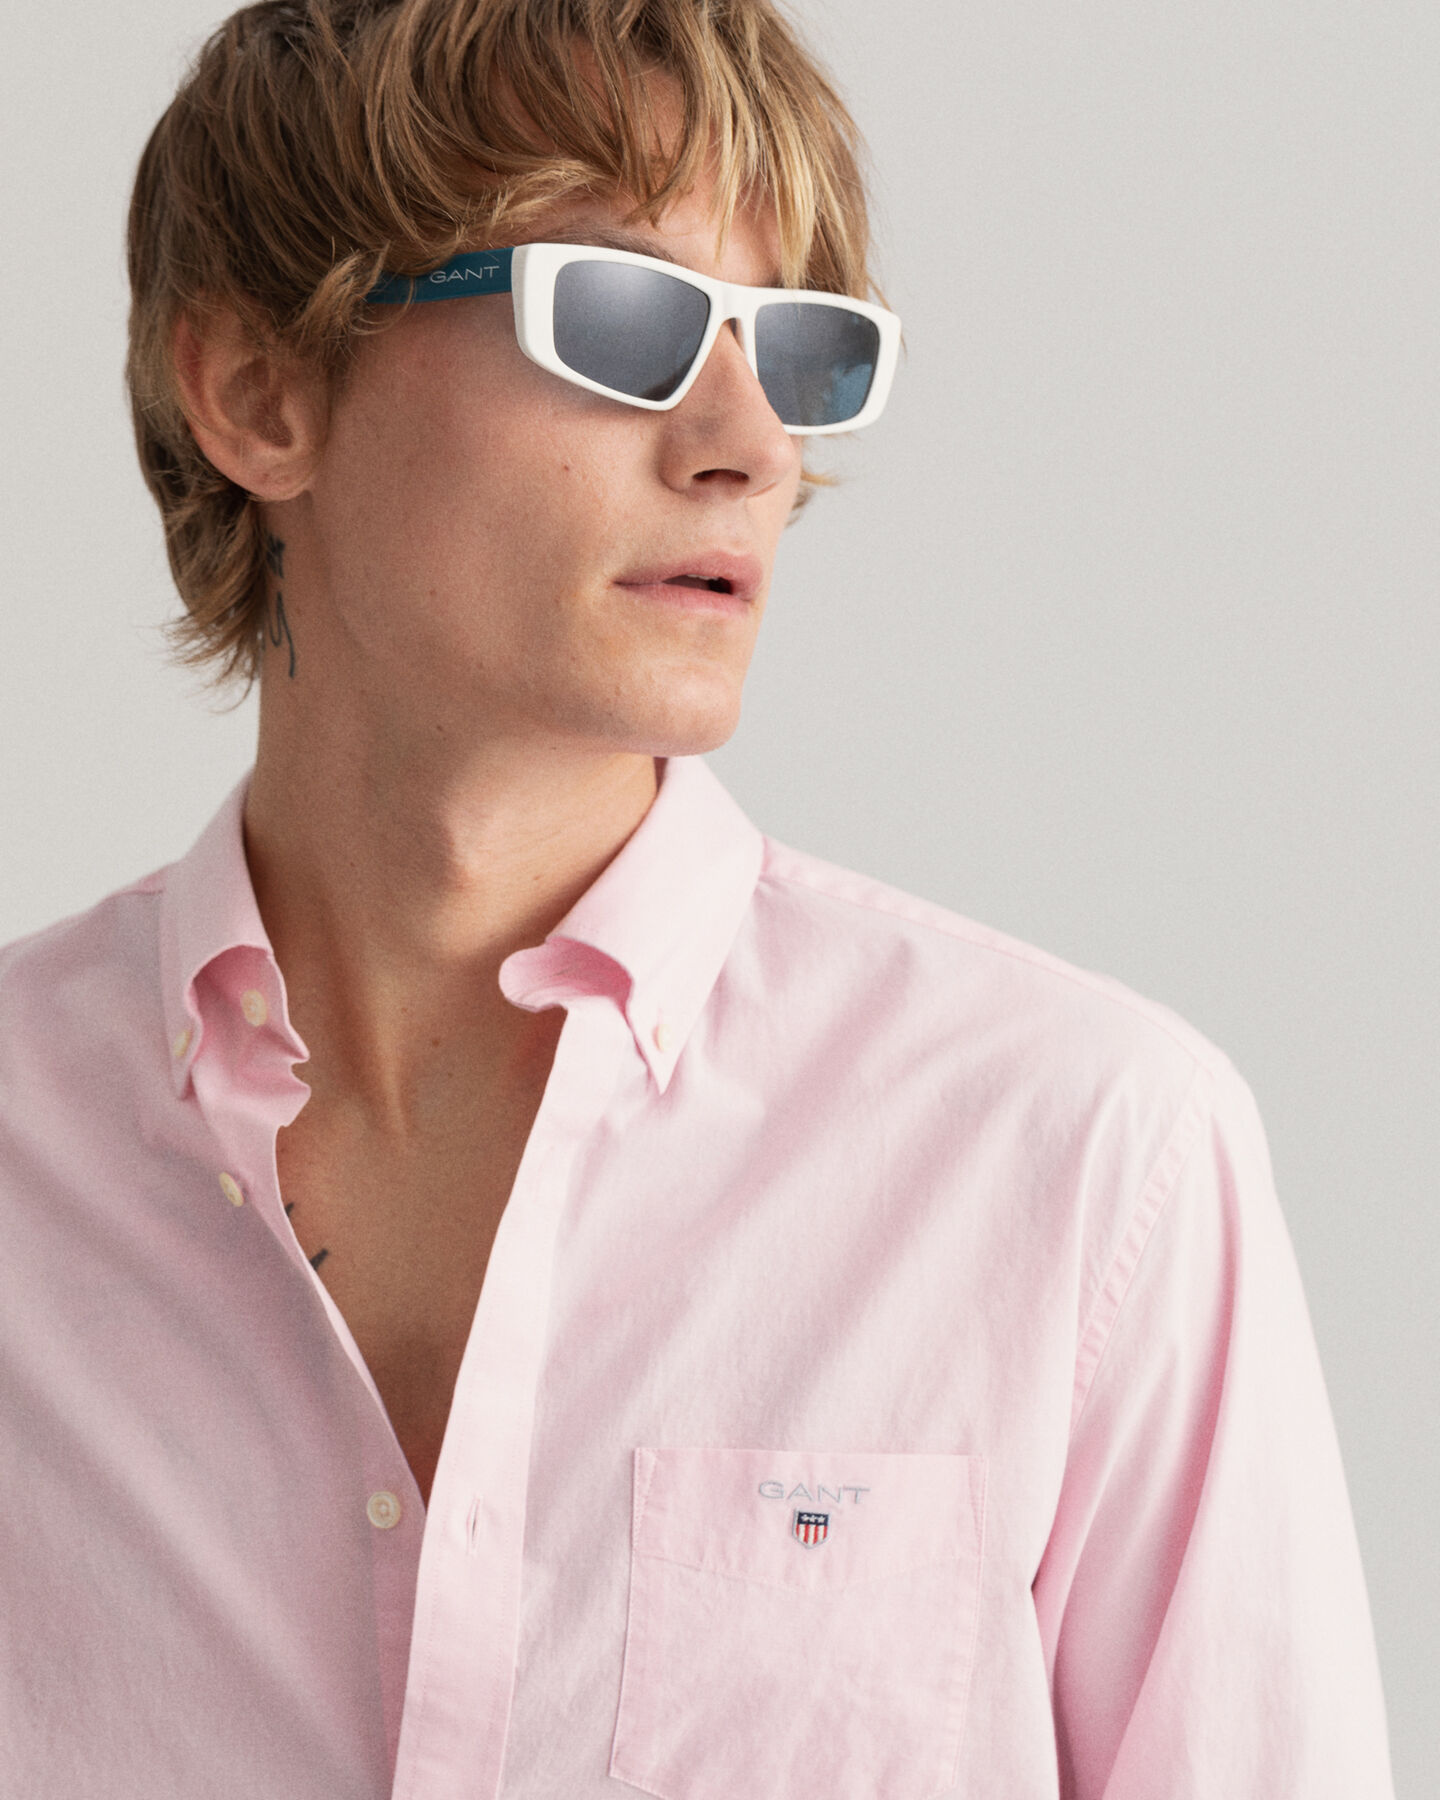 GANT Men's Bright Pink Dobby Stripe Square Fitted Shirt 365677 Size Medium